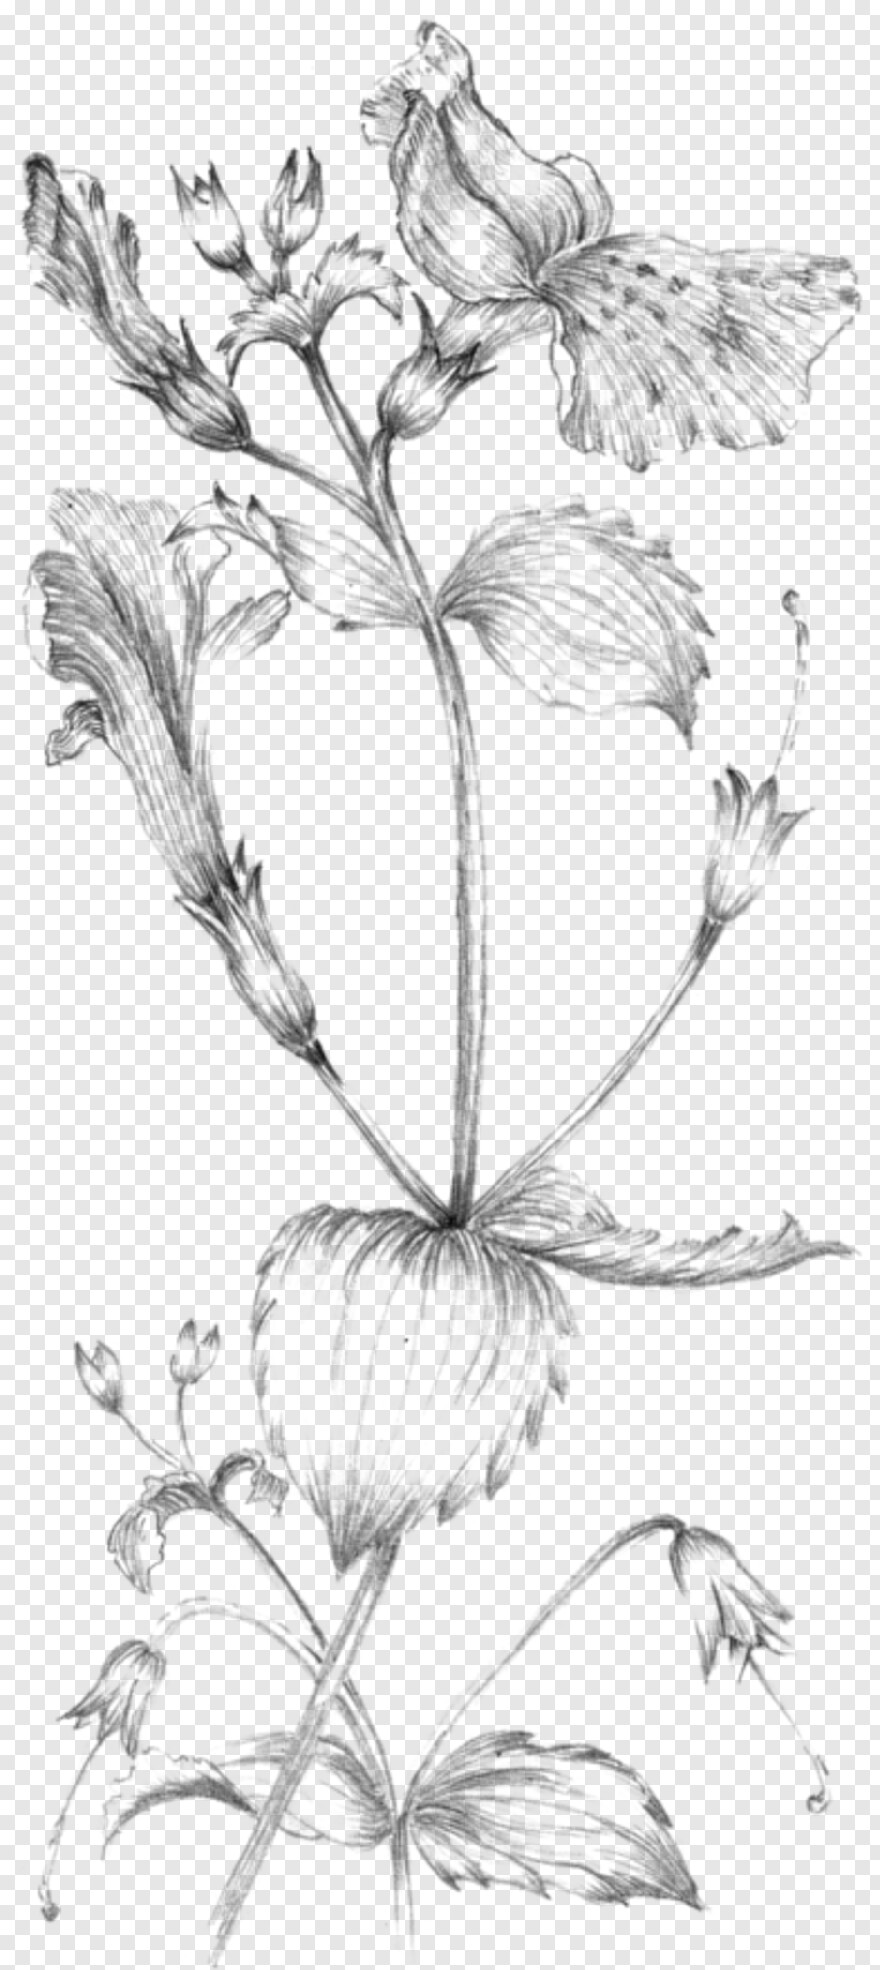  Weed Plant, Vine Plant, Emma Watson, Emma Stone, Potted Plant, House Plant